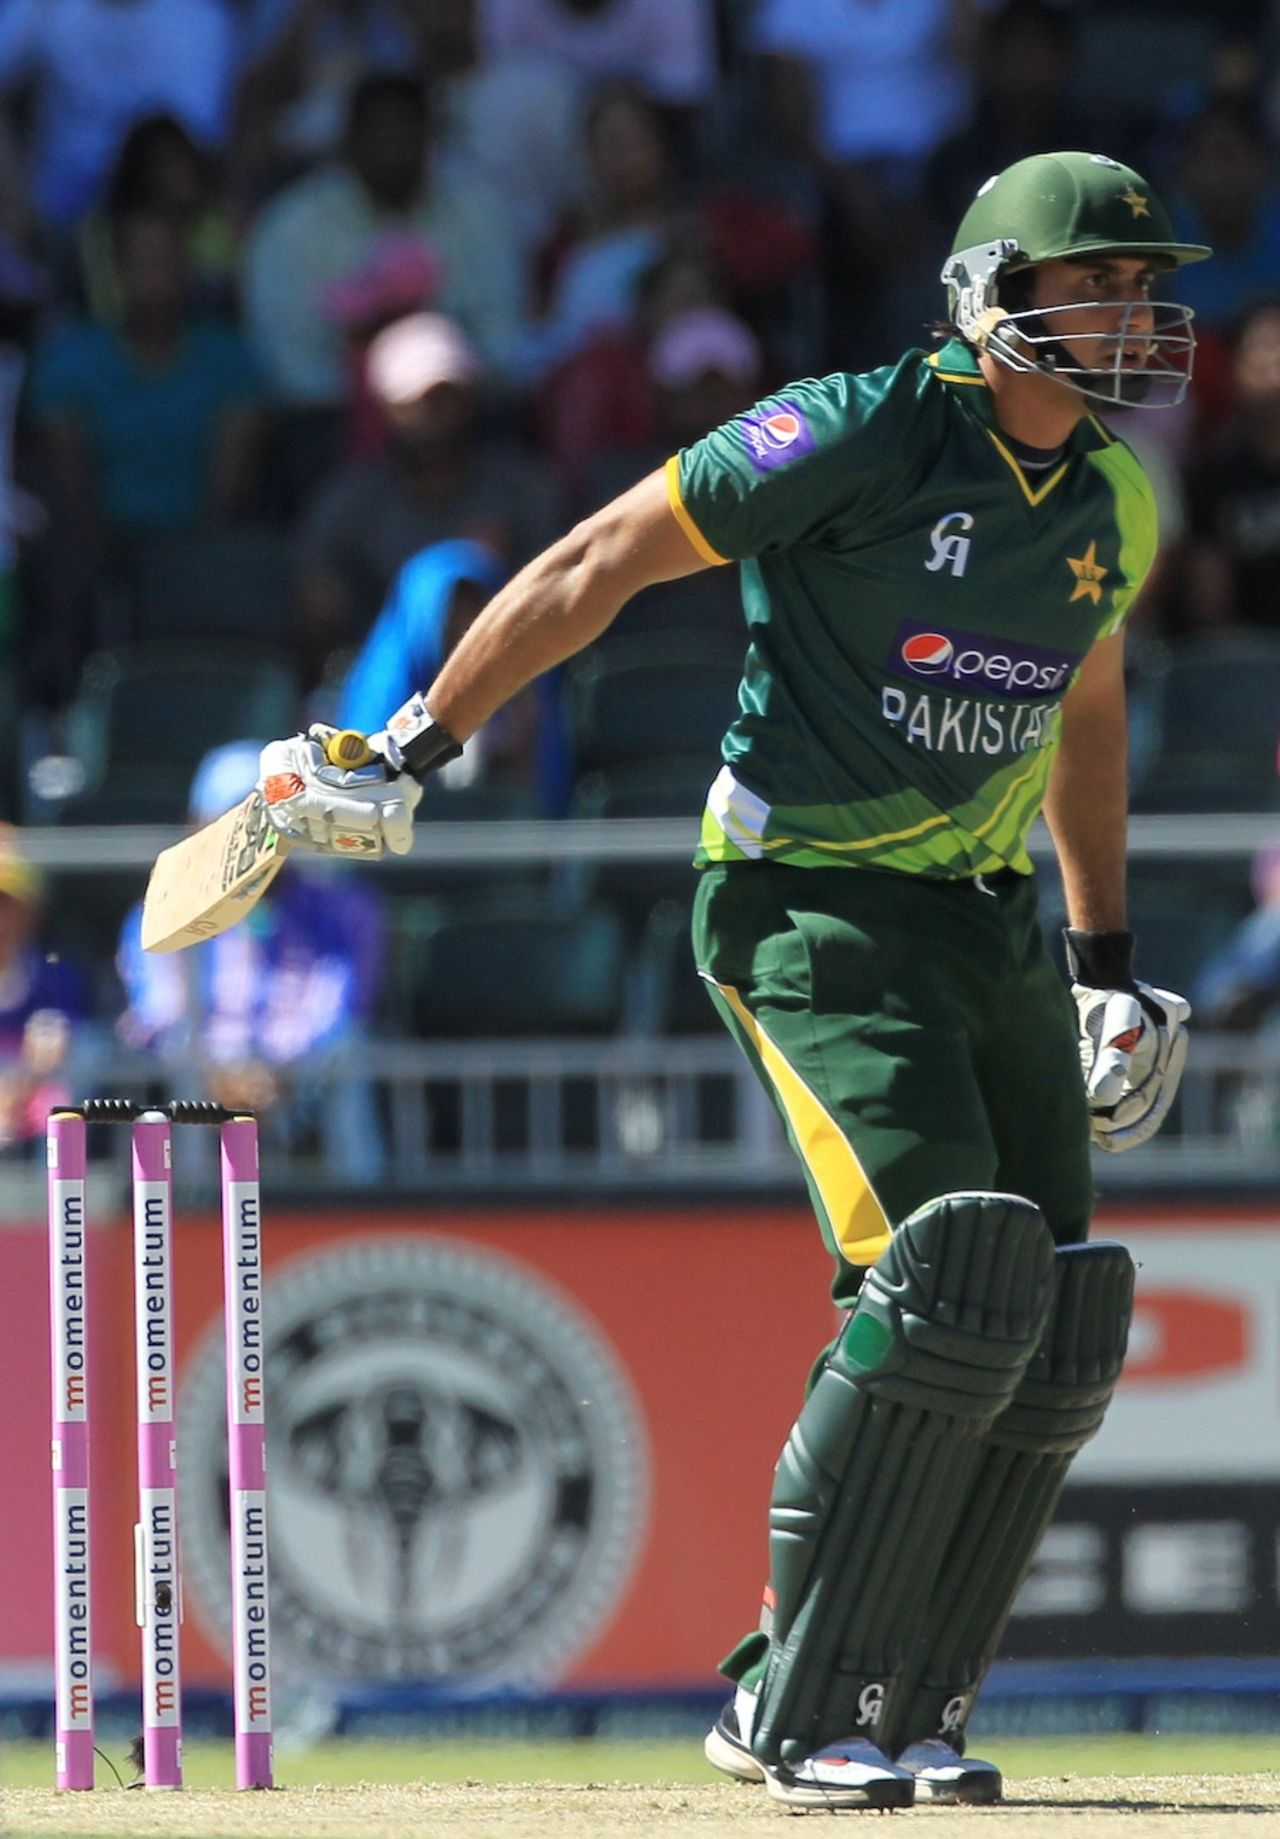 Nasir Jamshed reacts after being dismissed for 10, South Africa v Pakistan, 3rd ODI, Johannesburg, March 17, 2013